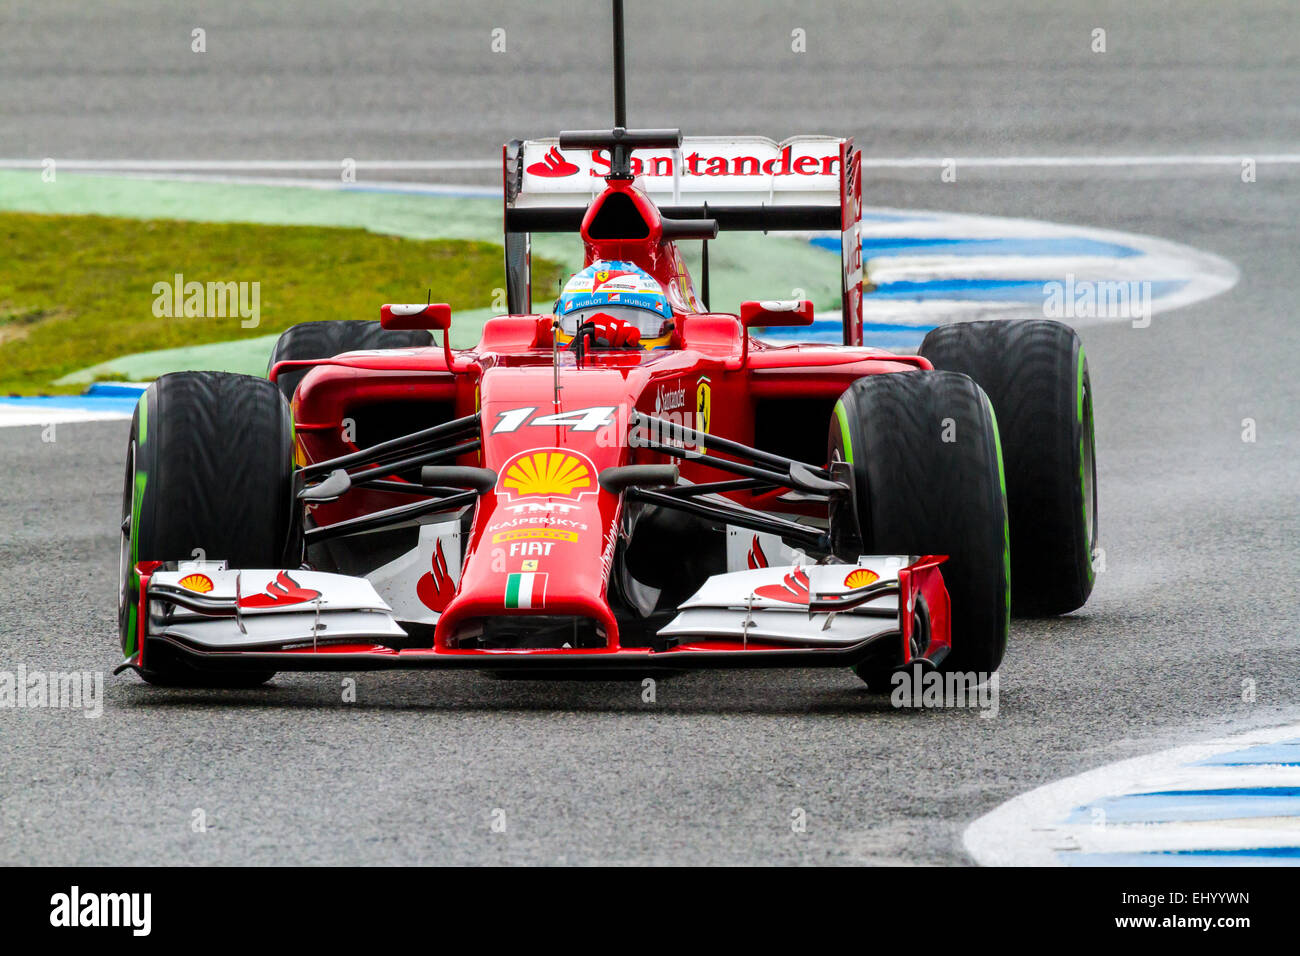 Fernando Alonso of Scuderia Ferrari F1 races on training session Stock Photo